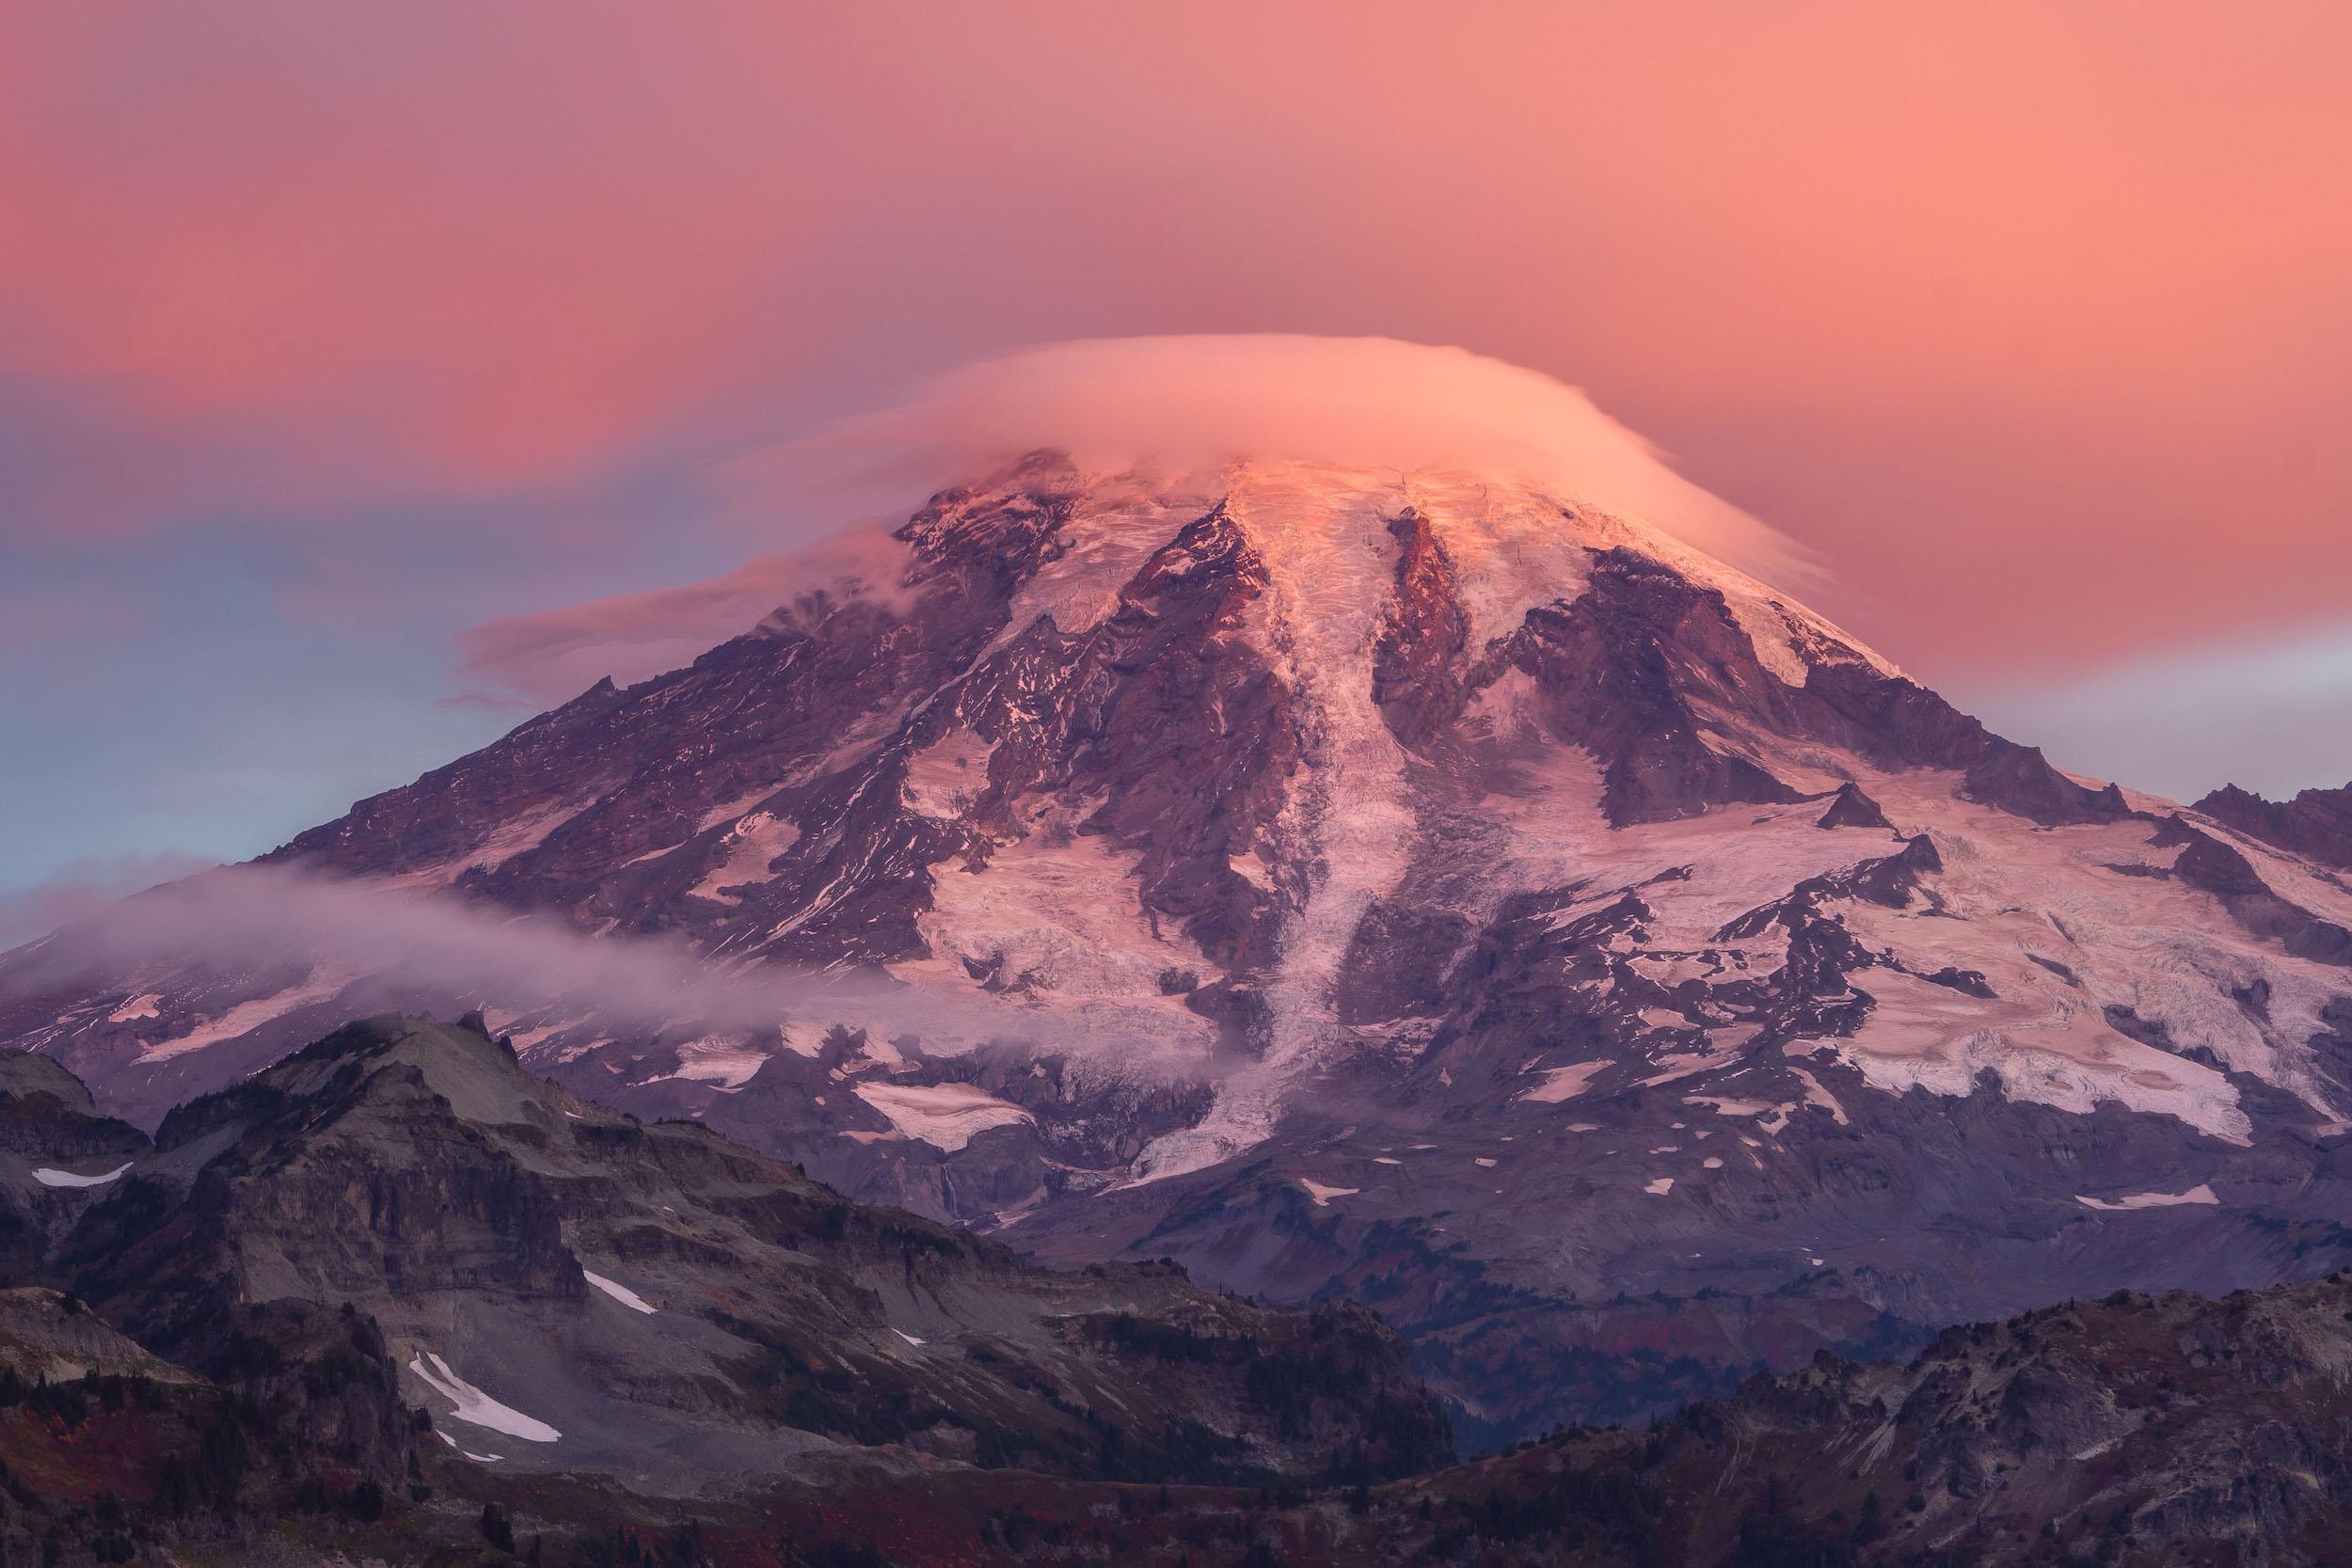 Mount Rainier. Photo by Brock Dallman